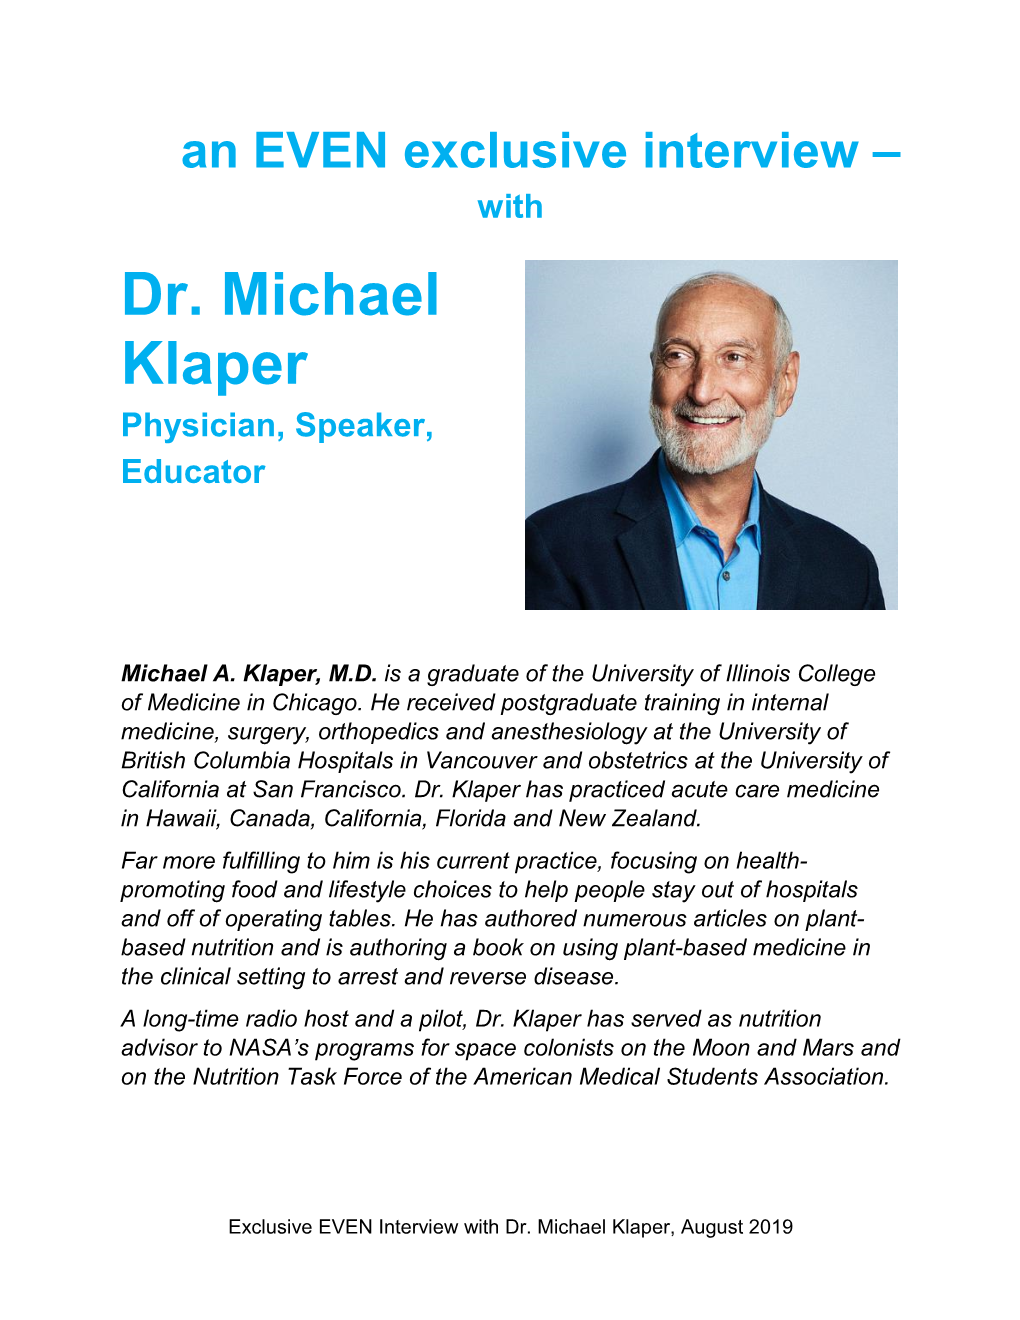 Michael Klaper Physician, Speaker, Educator